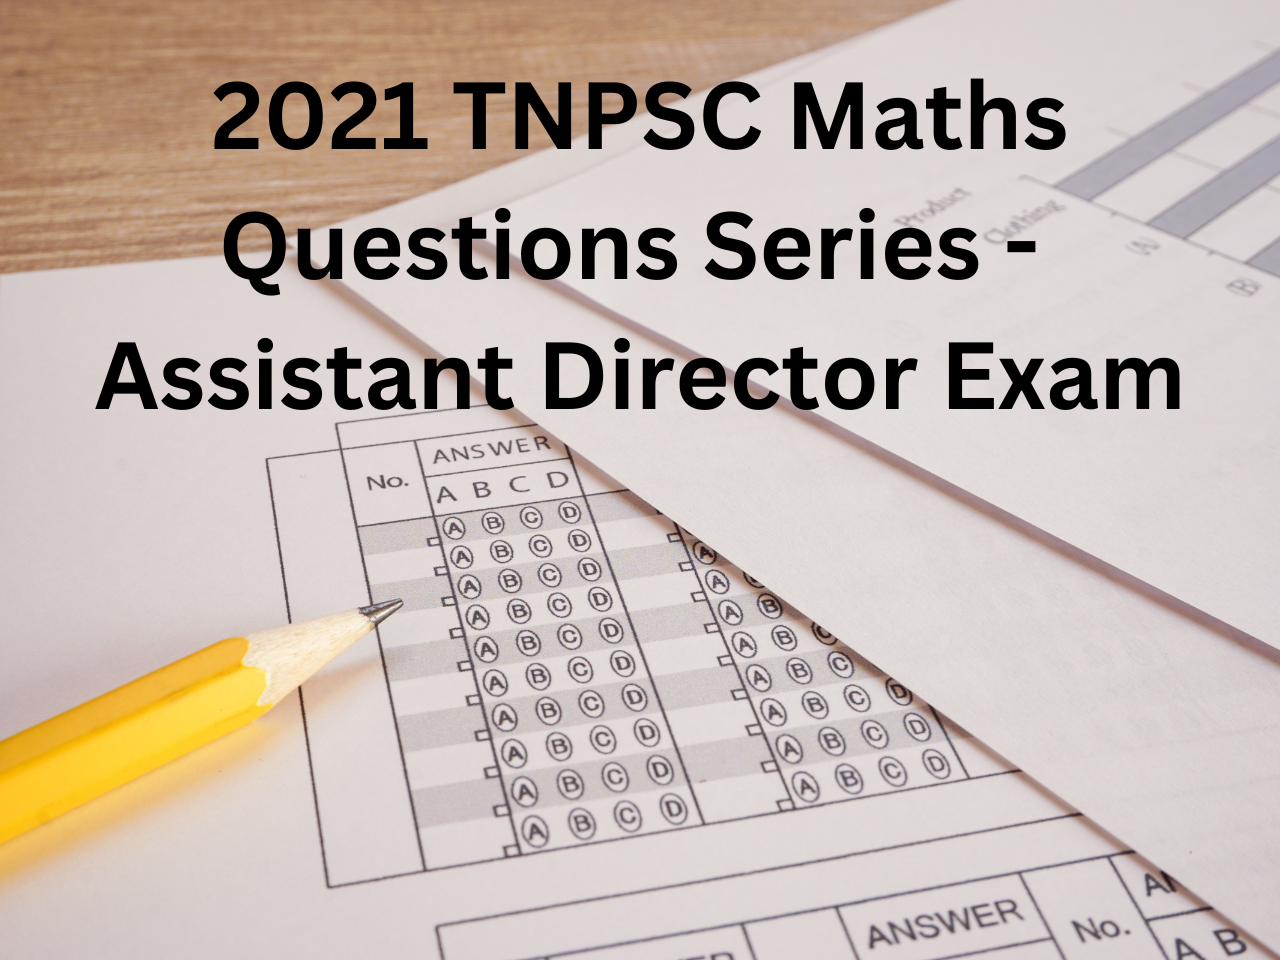 2021 TNPSC Maths Questions Series - Assistant Director Exam